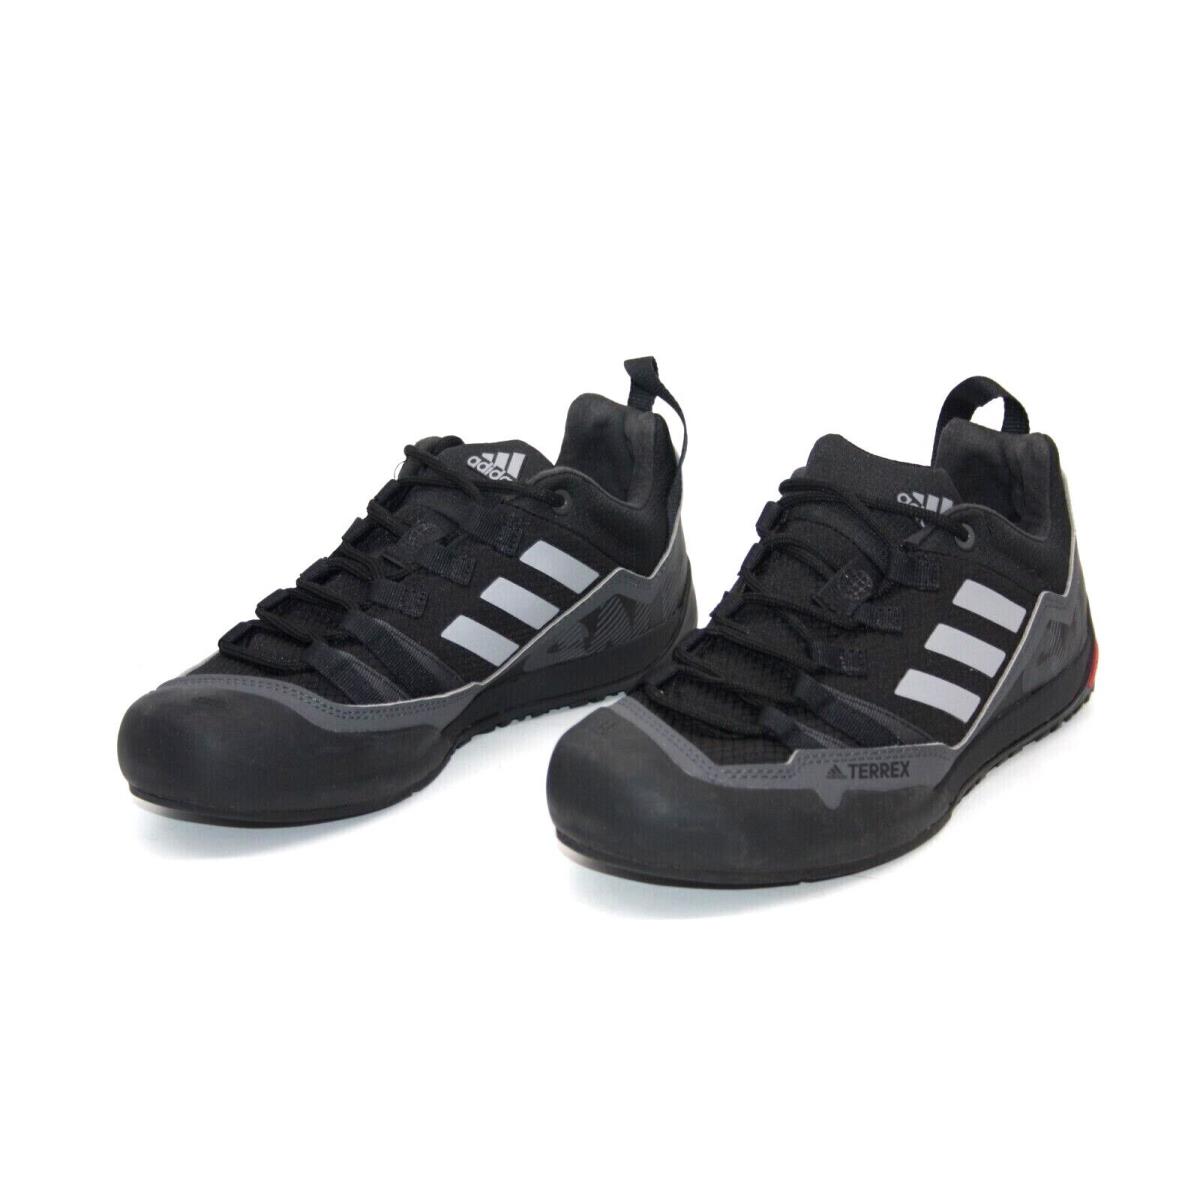 Adidas shoes Terrex Swift Solo - BLACK/BLACK/GREY 2